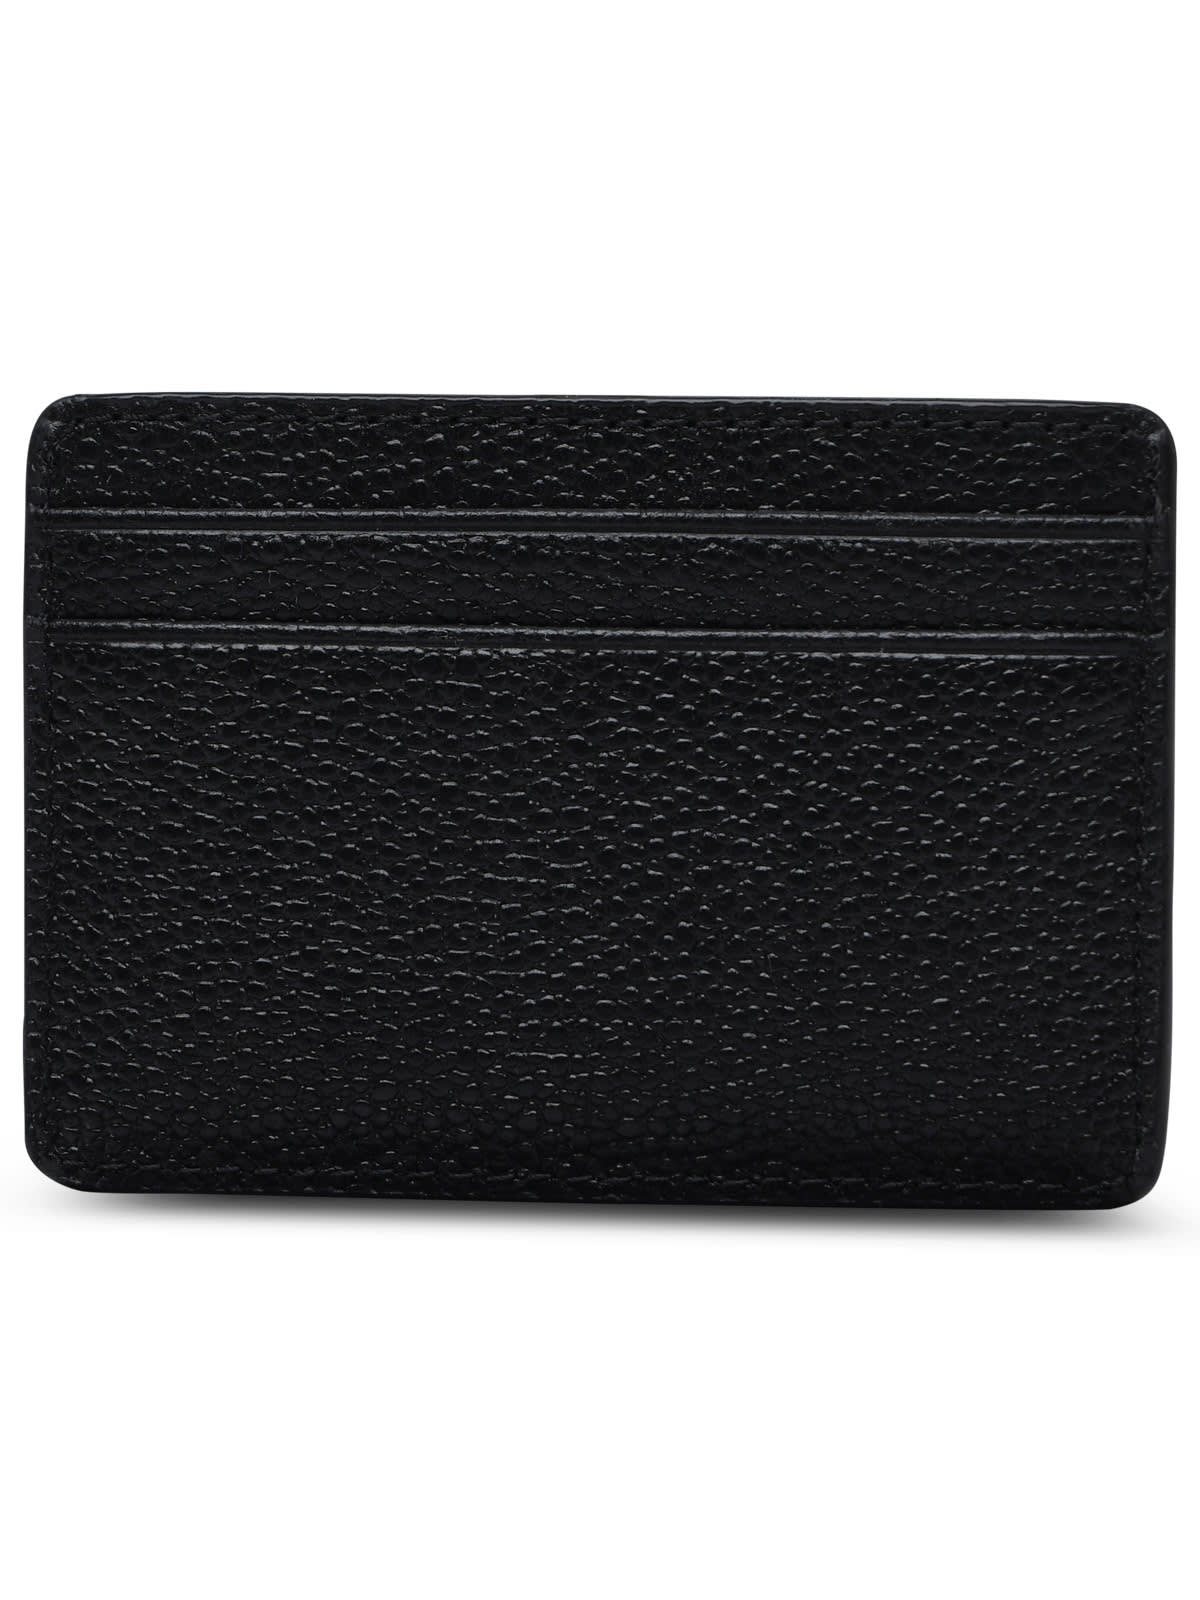 Shop Michael Michael Kors Black Leather Jet Set Cardholder